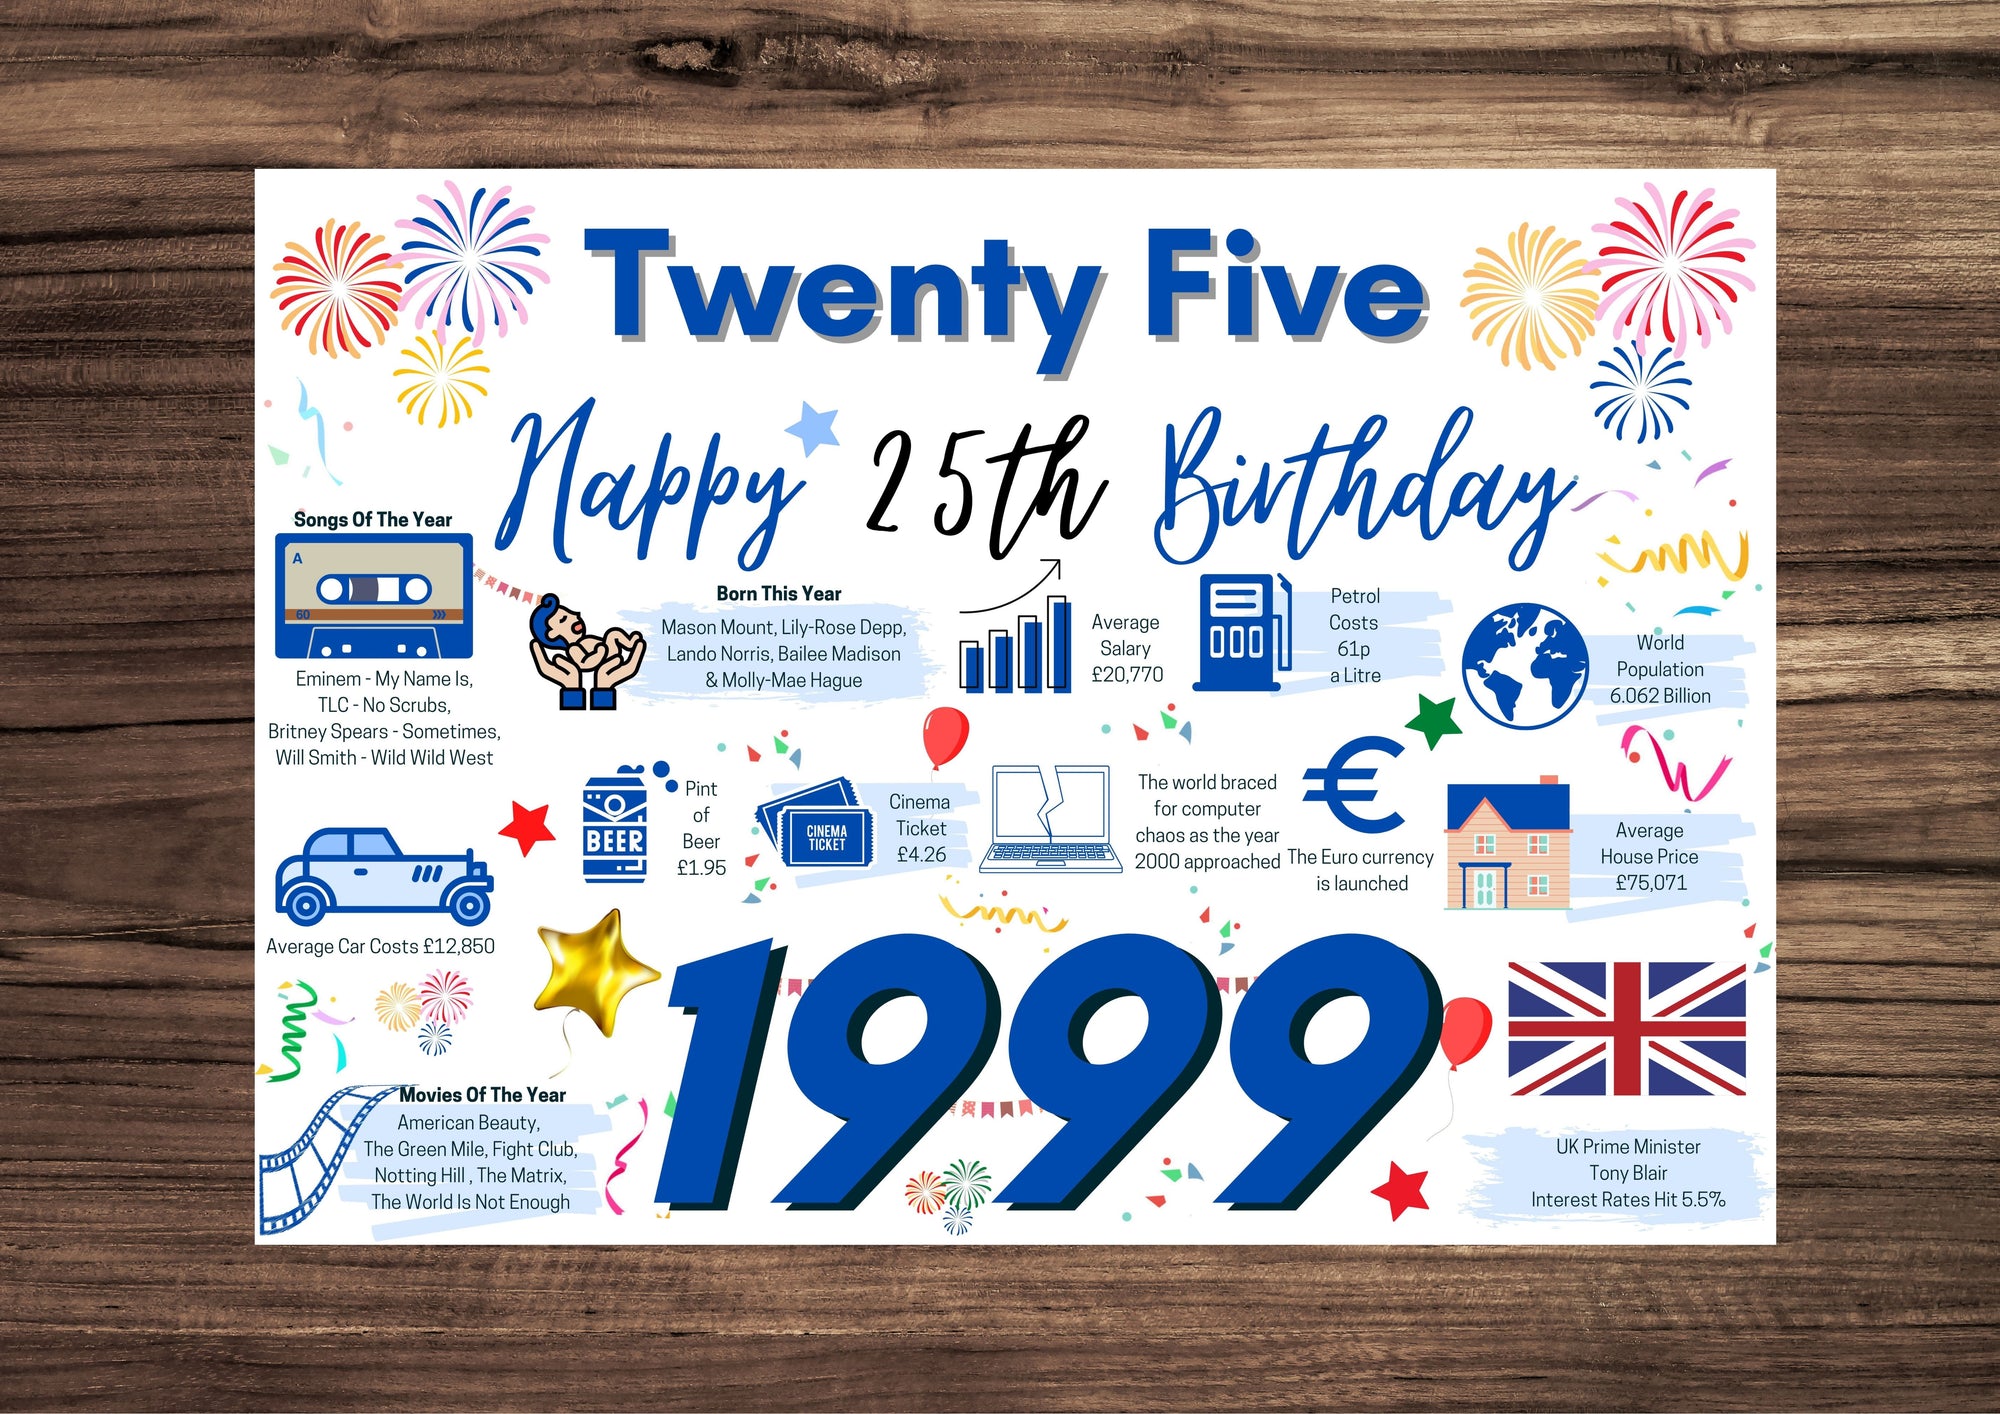 25th Birthday Card For Him Twenty five, Born In 1999 Facts Milestone